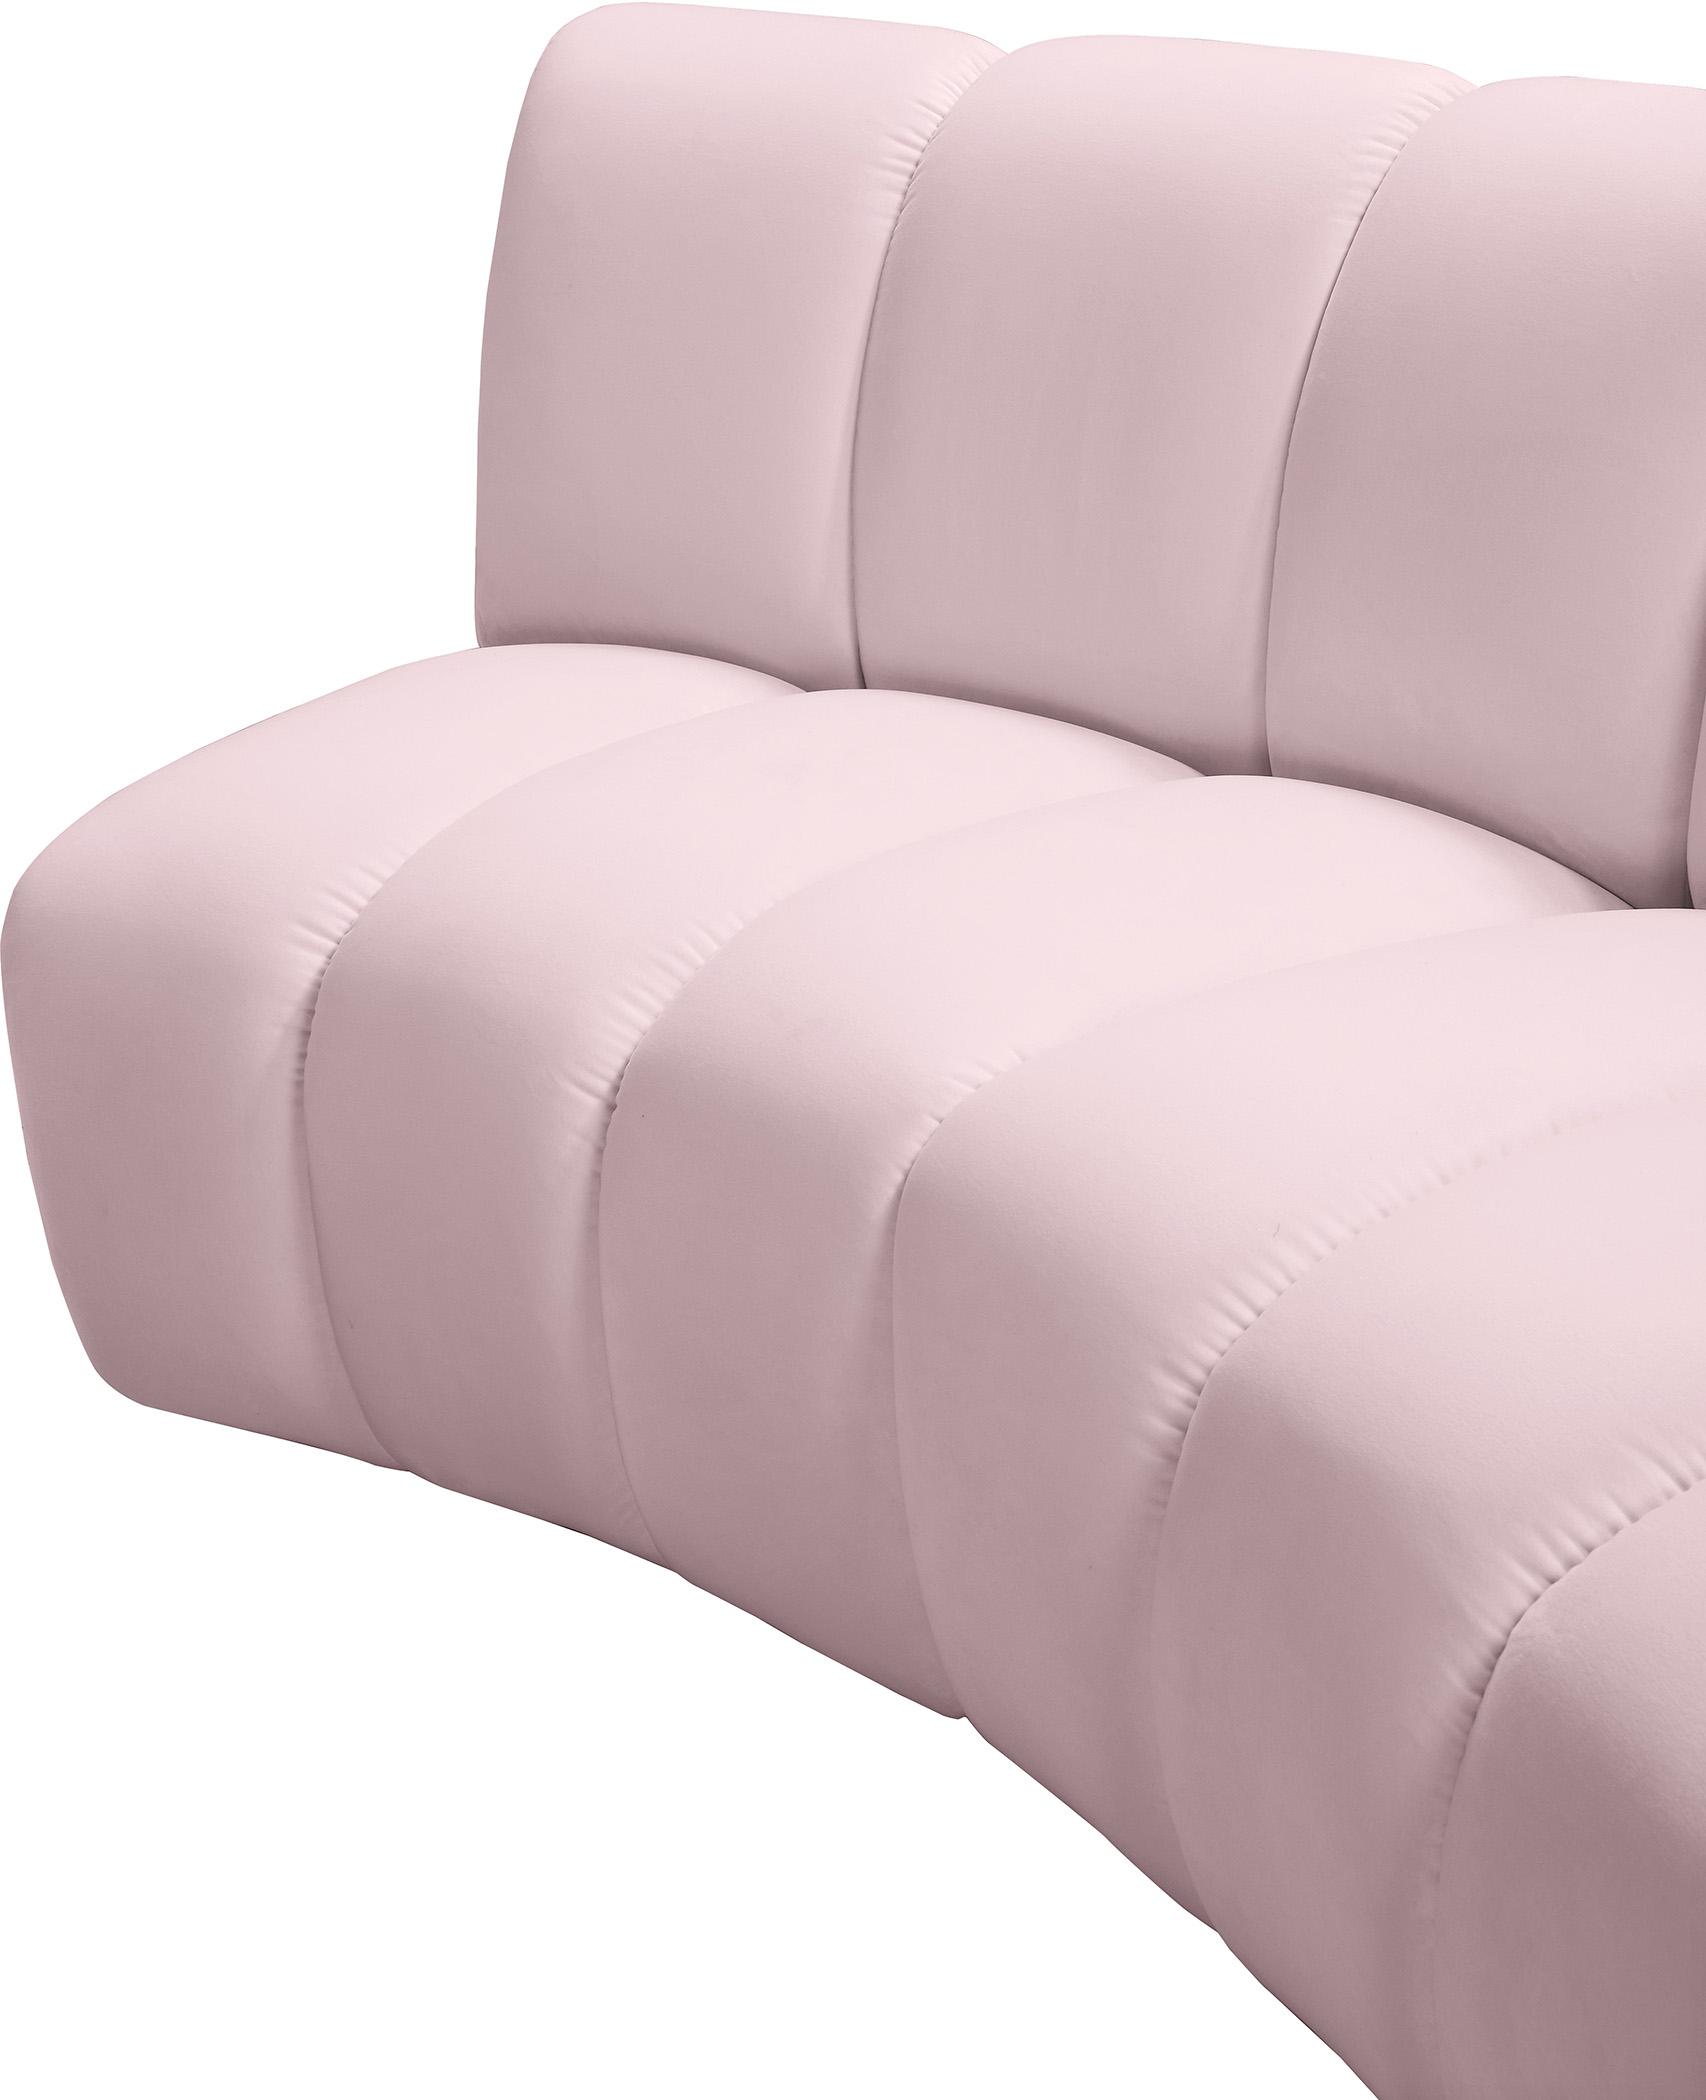 

    
Meridian Furniture INFINITY 638Pink-11PC Modular Sectional Sofa Pink 638Pink-11PC
